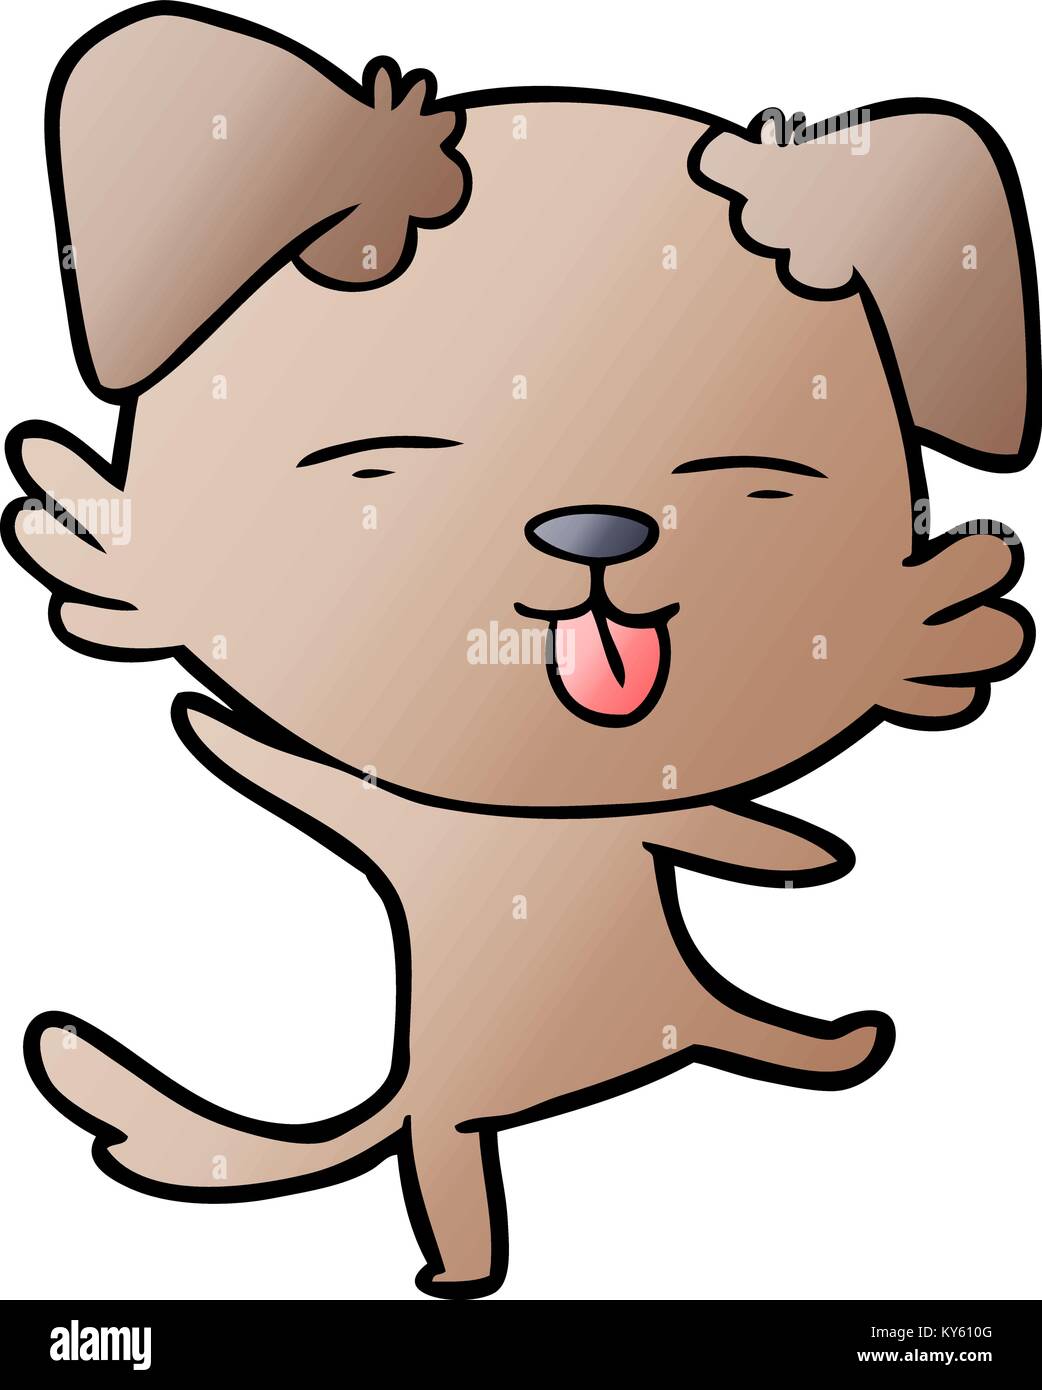 cartoon dancing dog Stock Vector Image & Art - Alamy